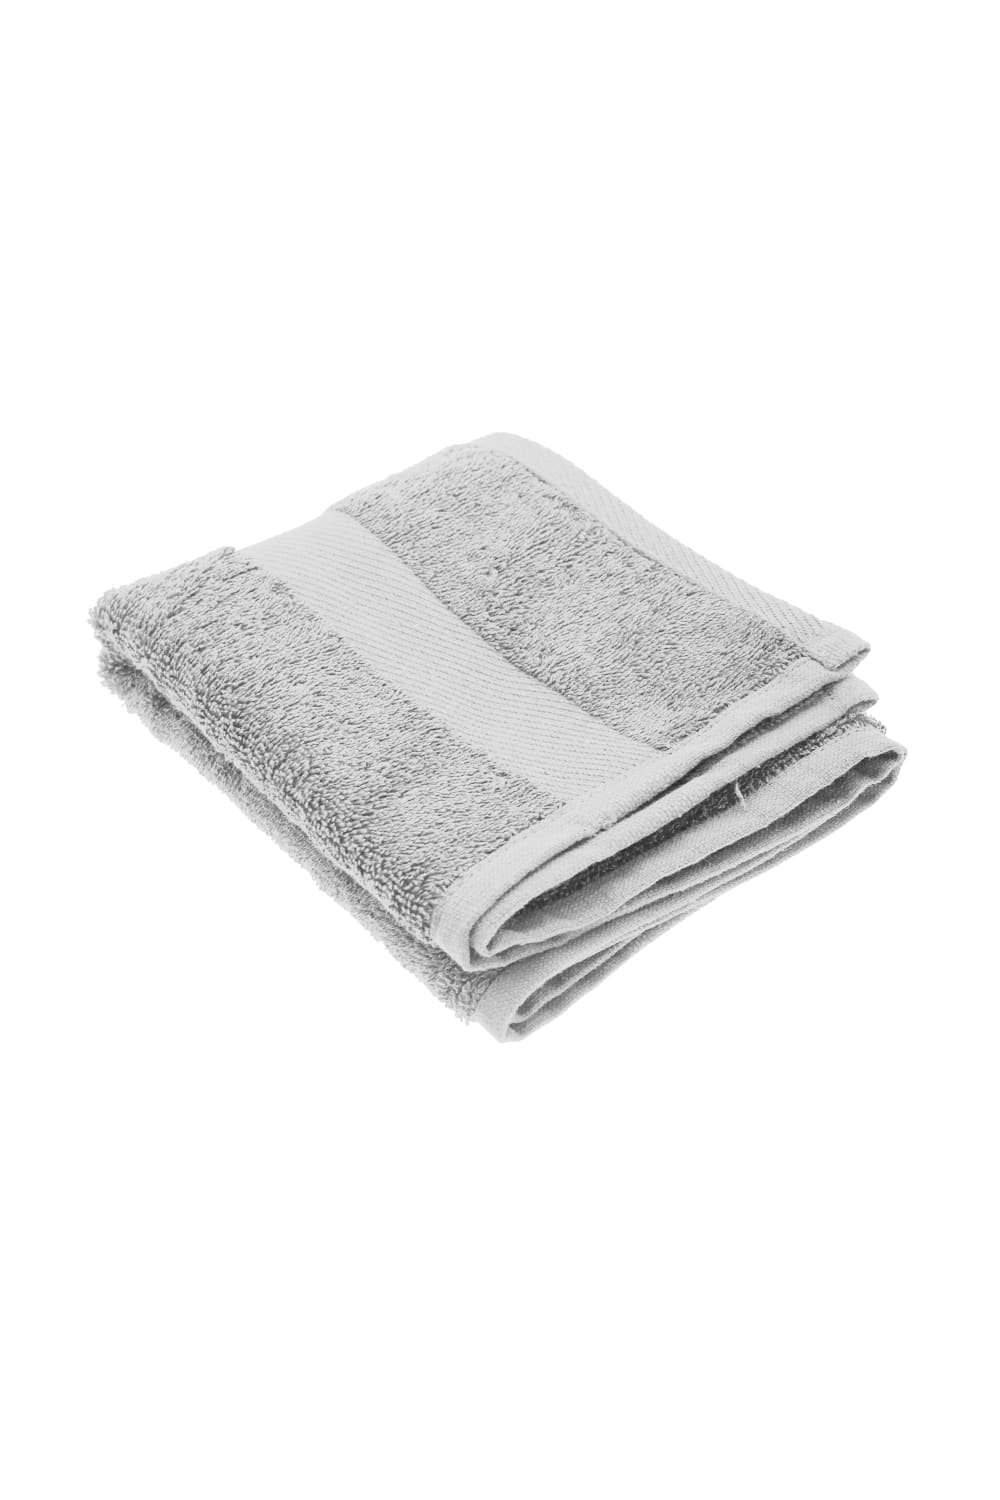 Jassz Premium Heavyweight Plain Guest Hand Towel 16 x 24 inches (White) (One Size)